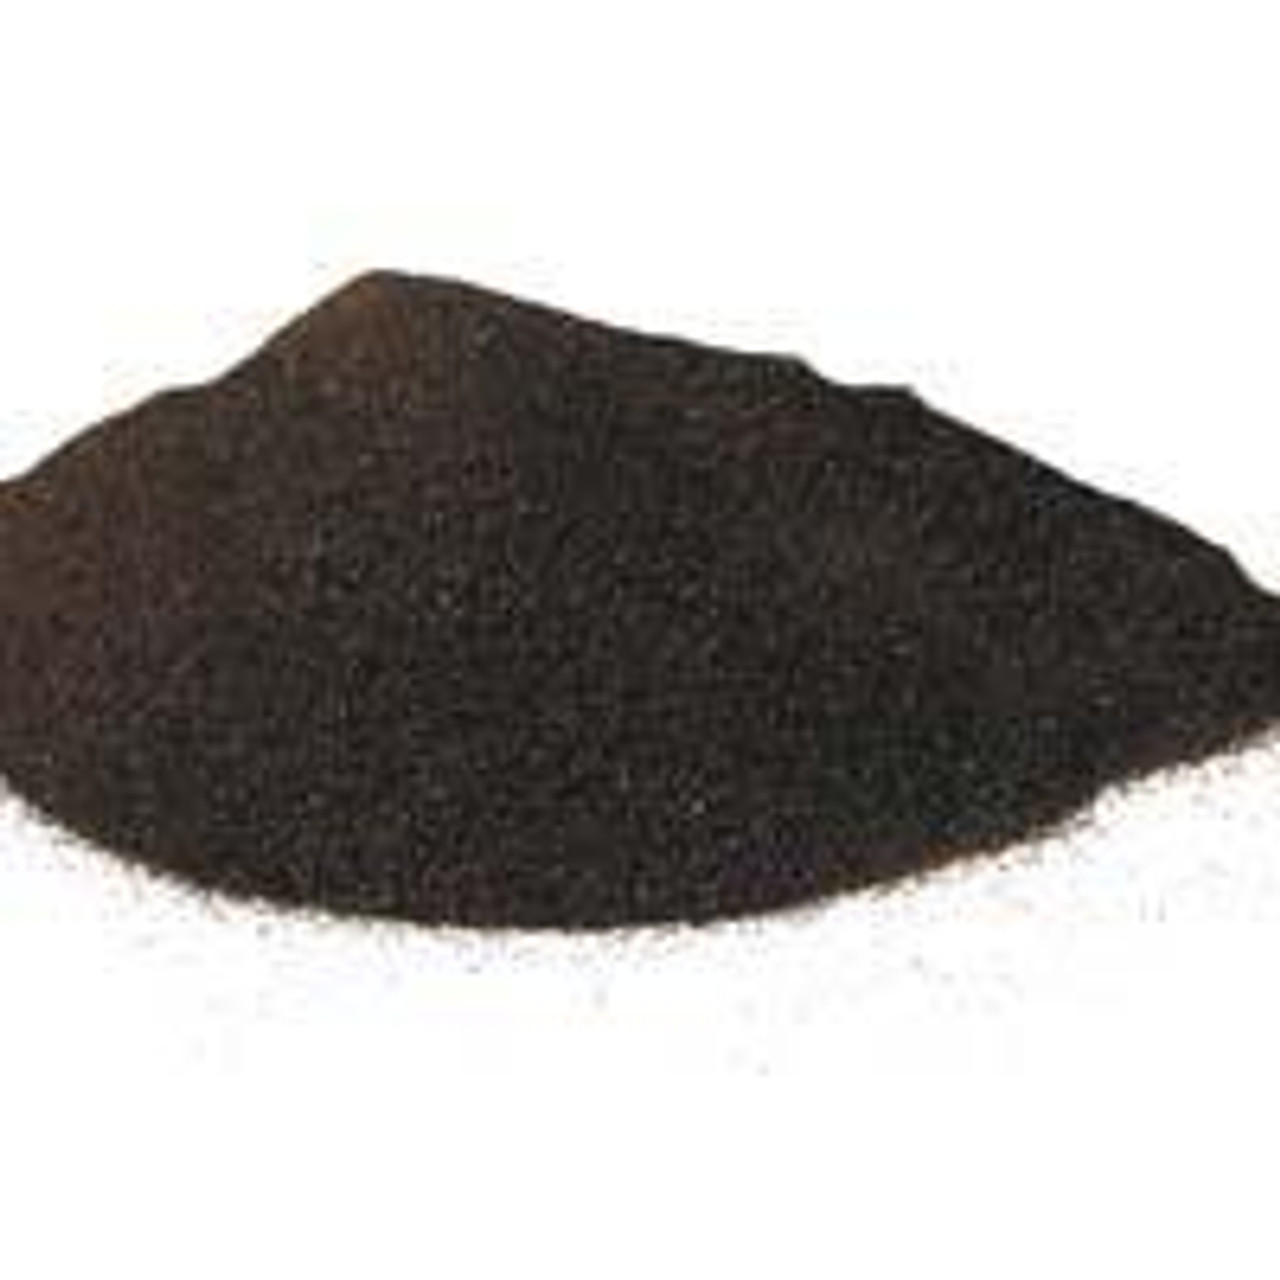 Optional Black Silica Sand